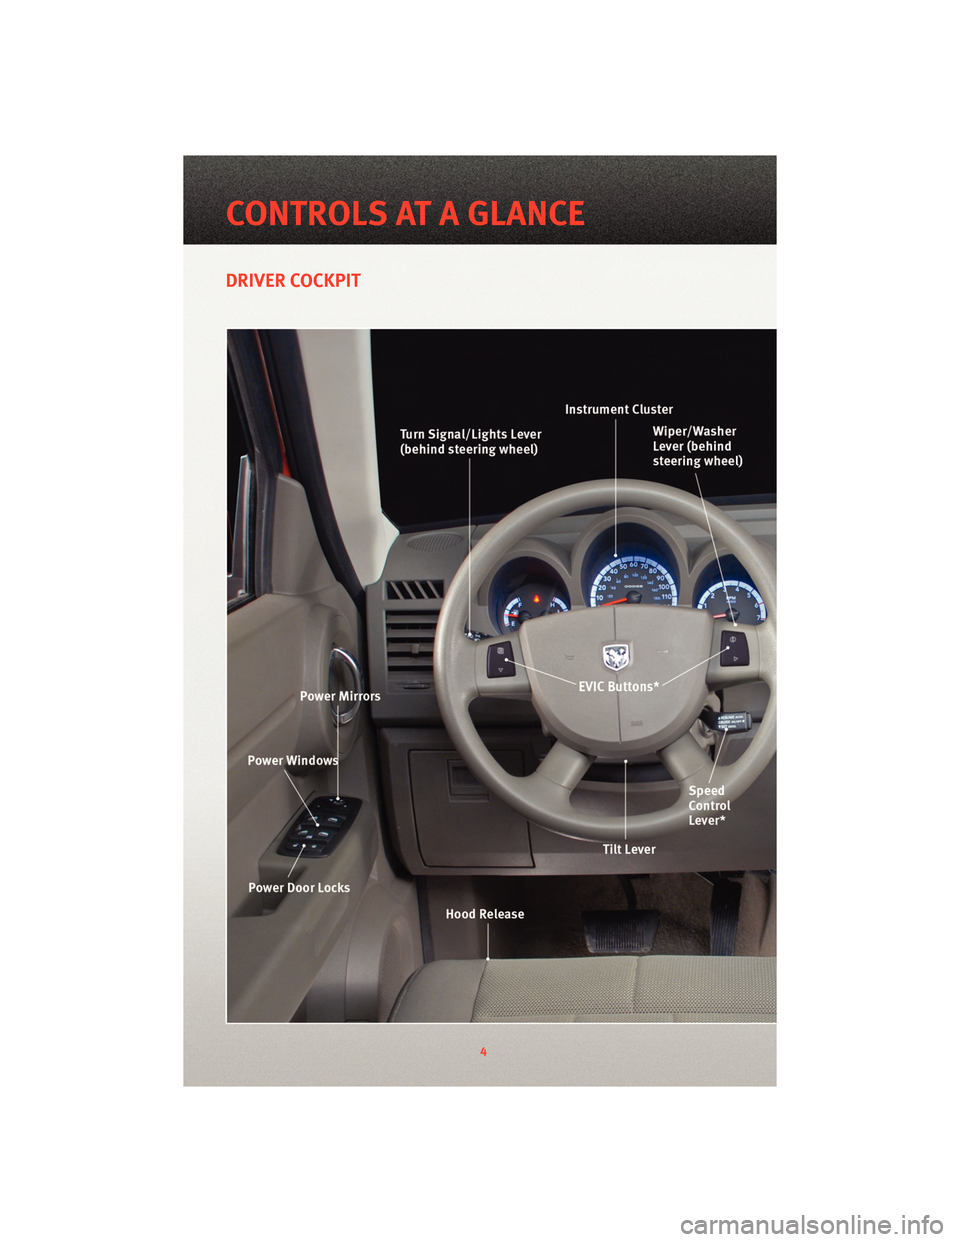 DODGE NITRO 2010 1.G User Guide DRIVER COCKPIT
4
CONTROLS AT A GLANCE 